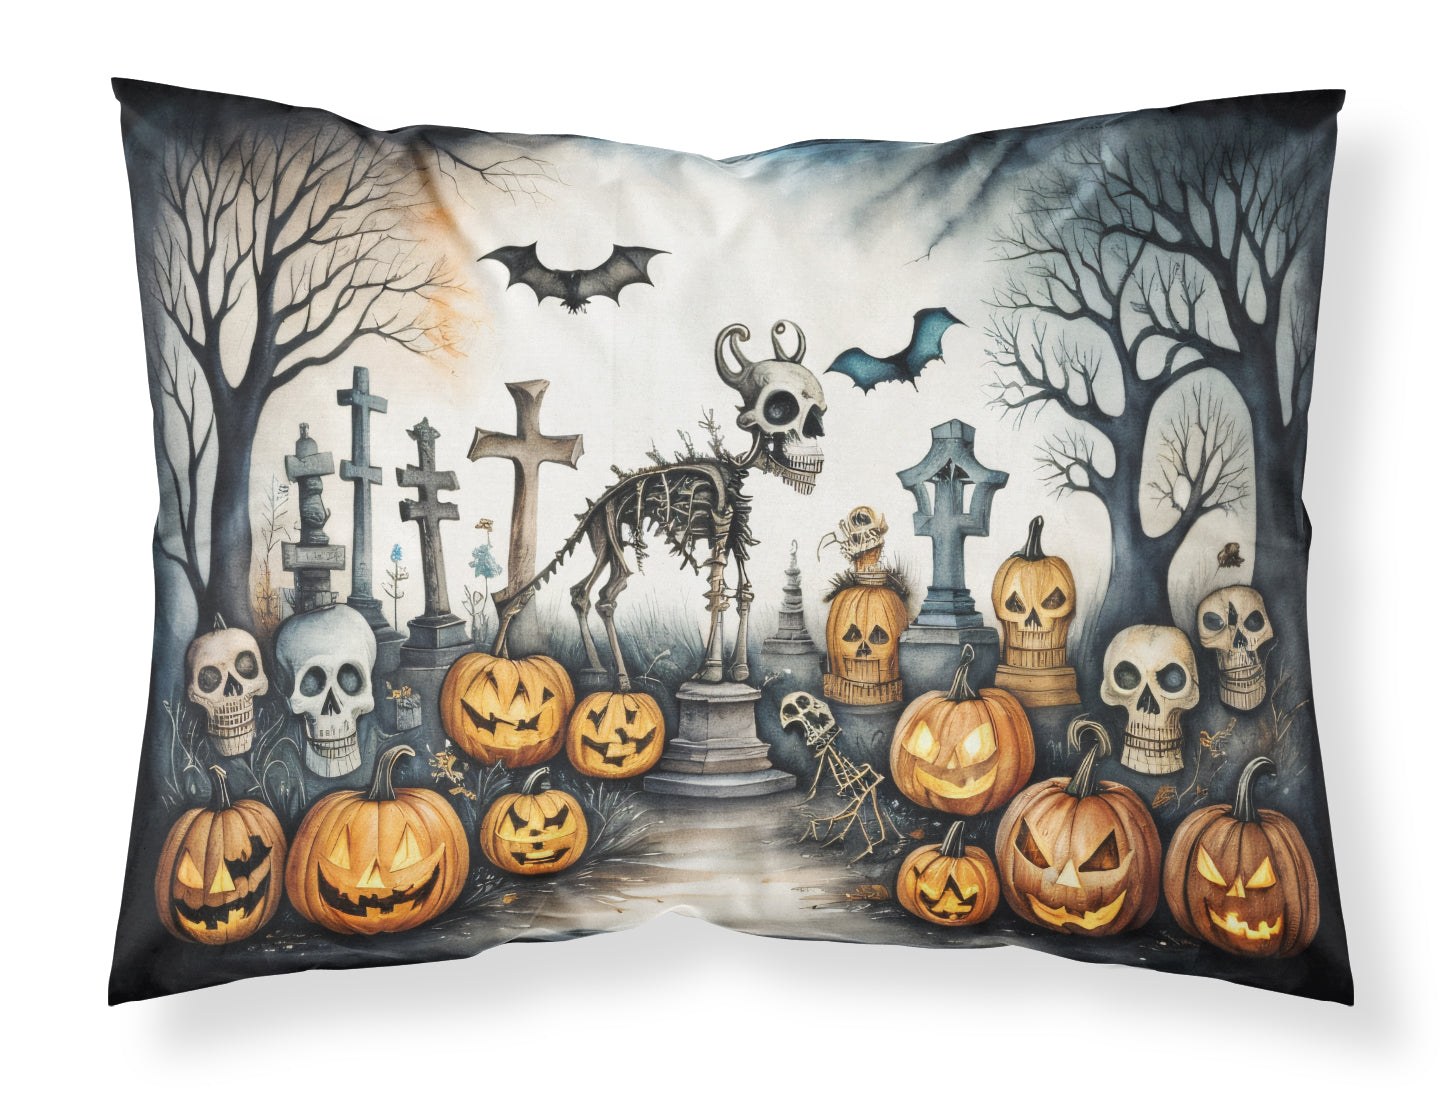 Buy this Pet Cemetery Spooky Halloween Fabric Standard Pillowcase